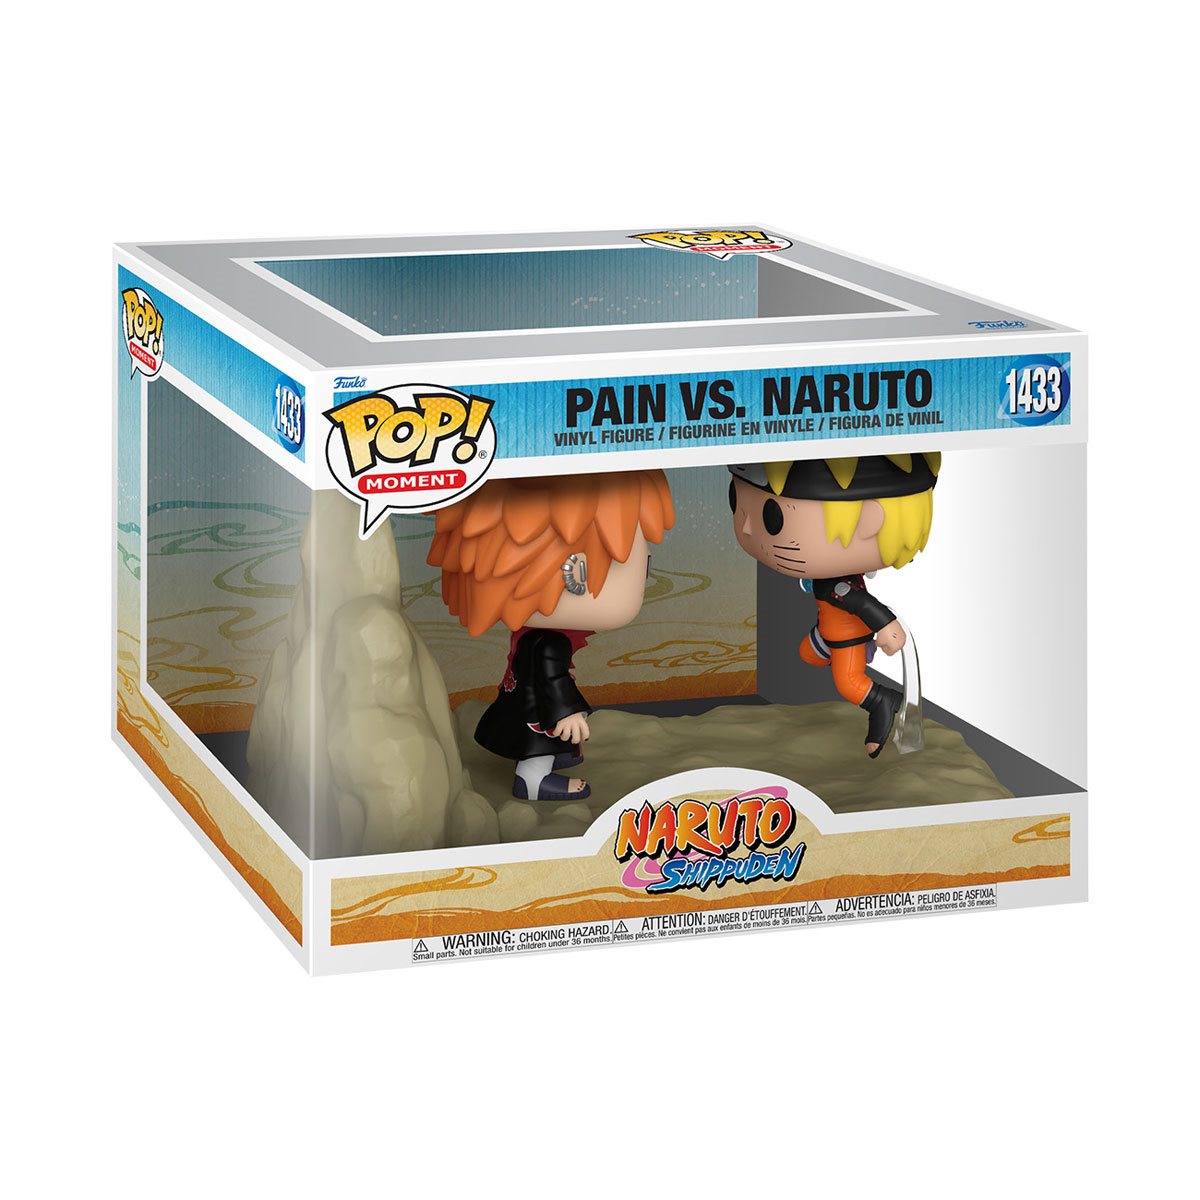 POP! Moment: Naruto Shippuden - Pain vs. Naruto #1433